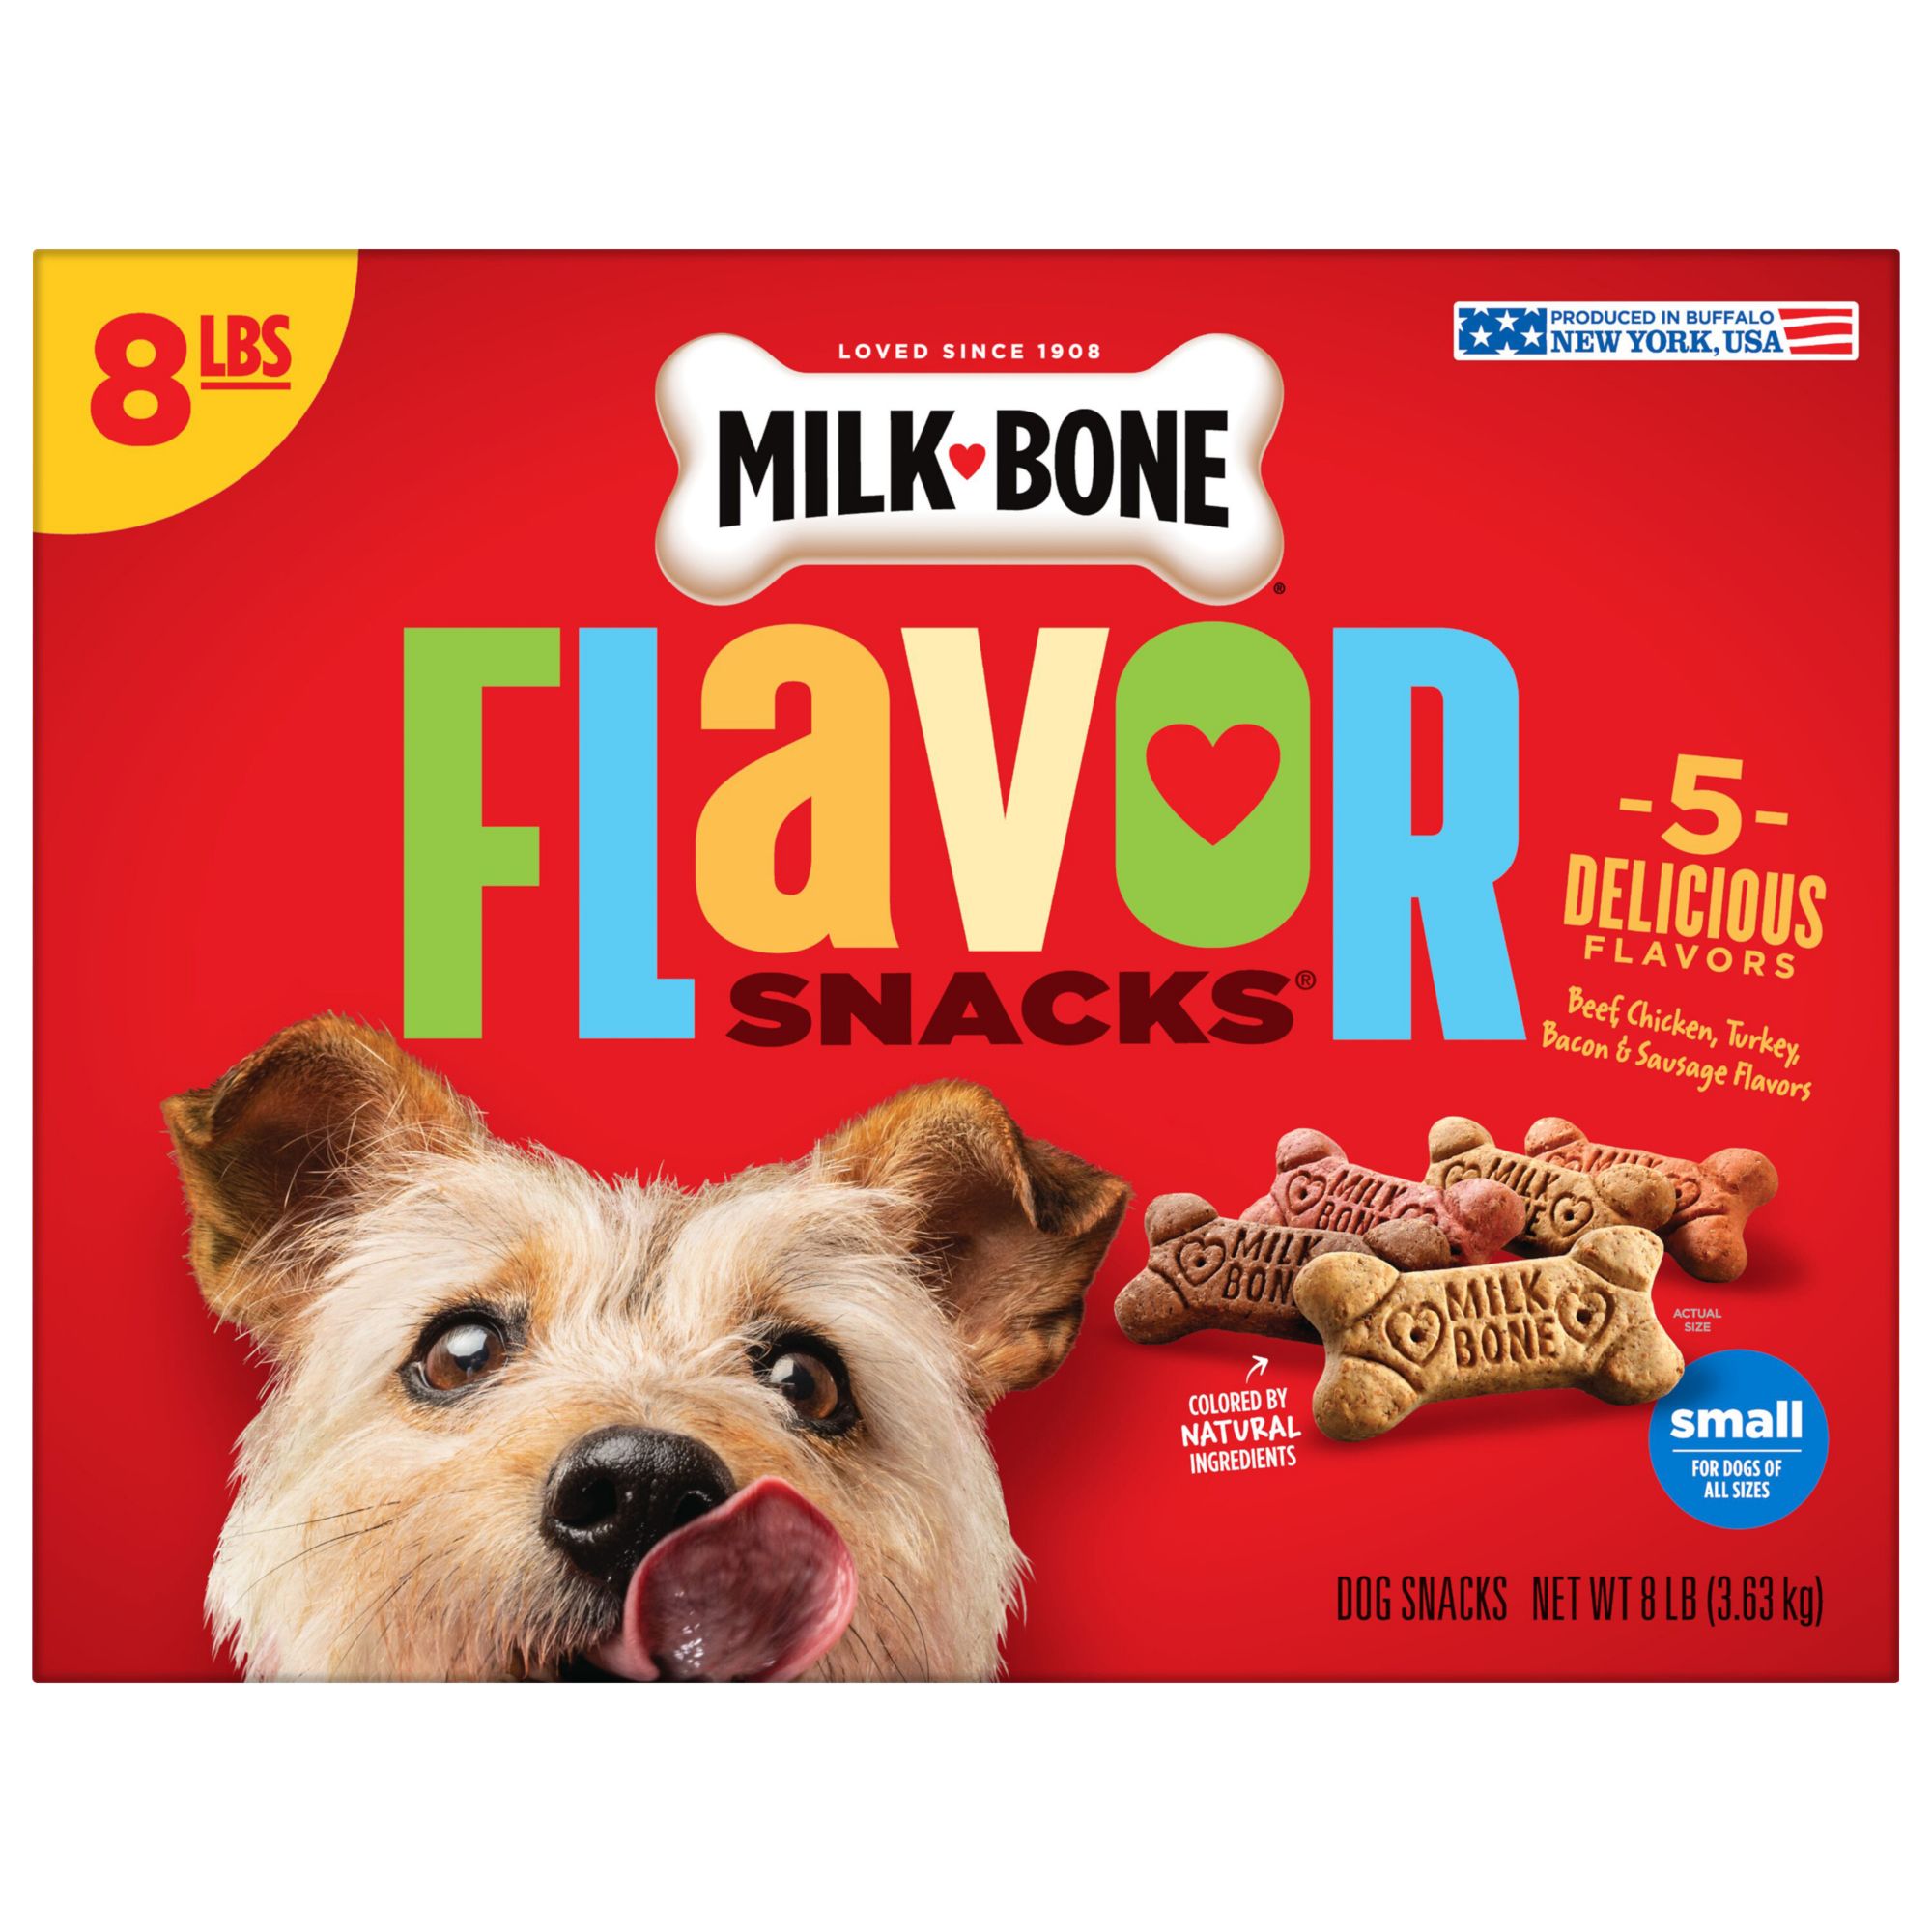 Milk-Bone Flavor Snacks Small Dog Biscuits, Flavored Crunchy Dog Treats, 8 lb.